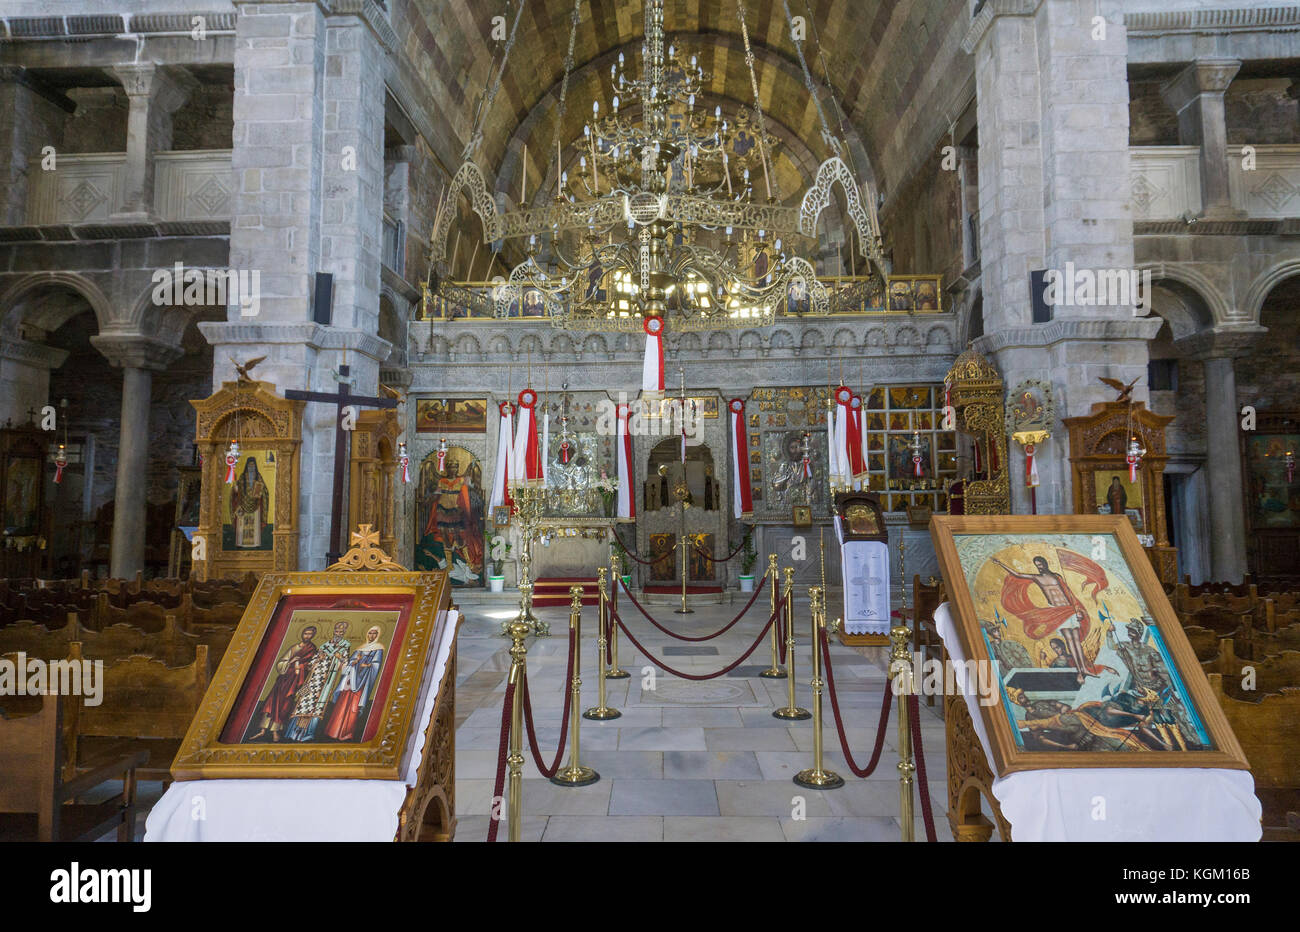 Icones inside the church Panagia Ekatontapyliani, Parikia, Paros island, Cyclades, Aegean, Greece Stock Photo